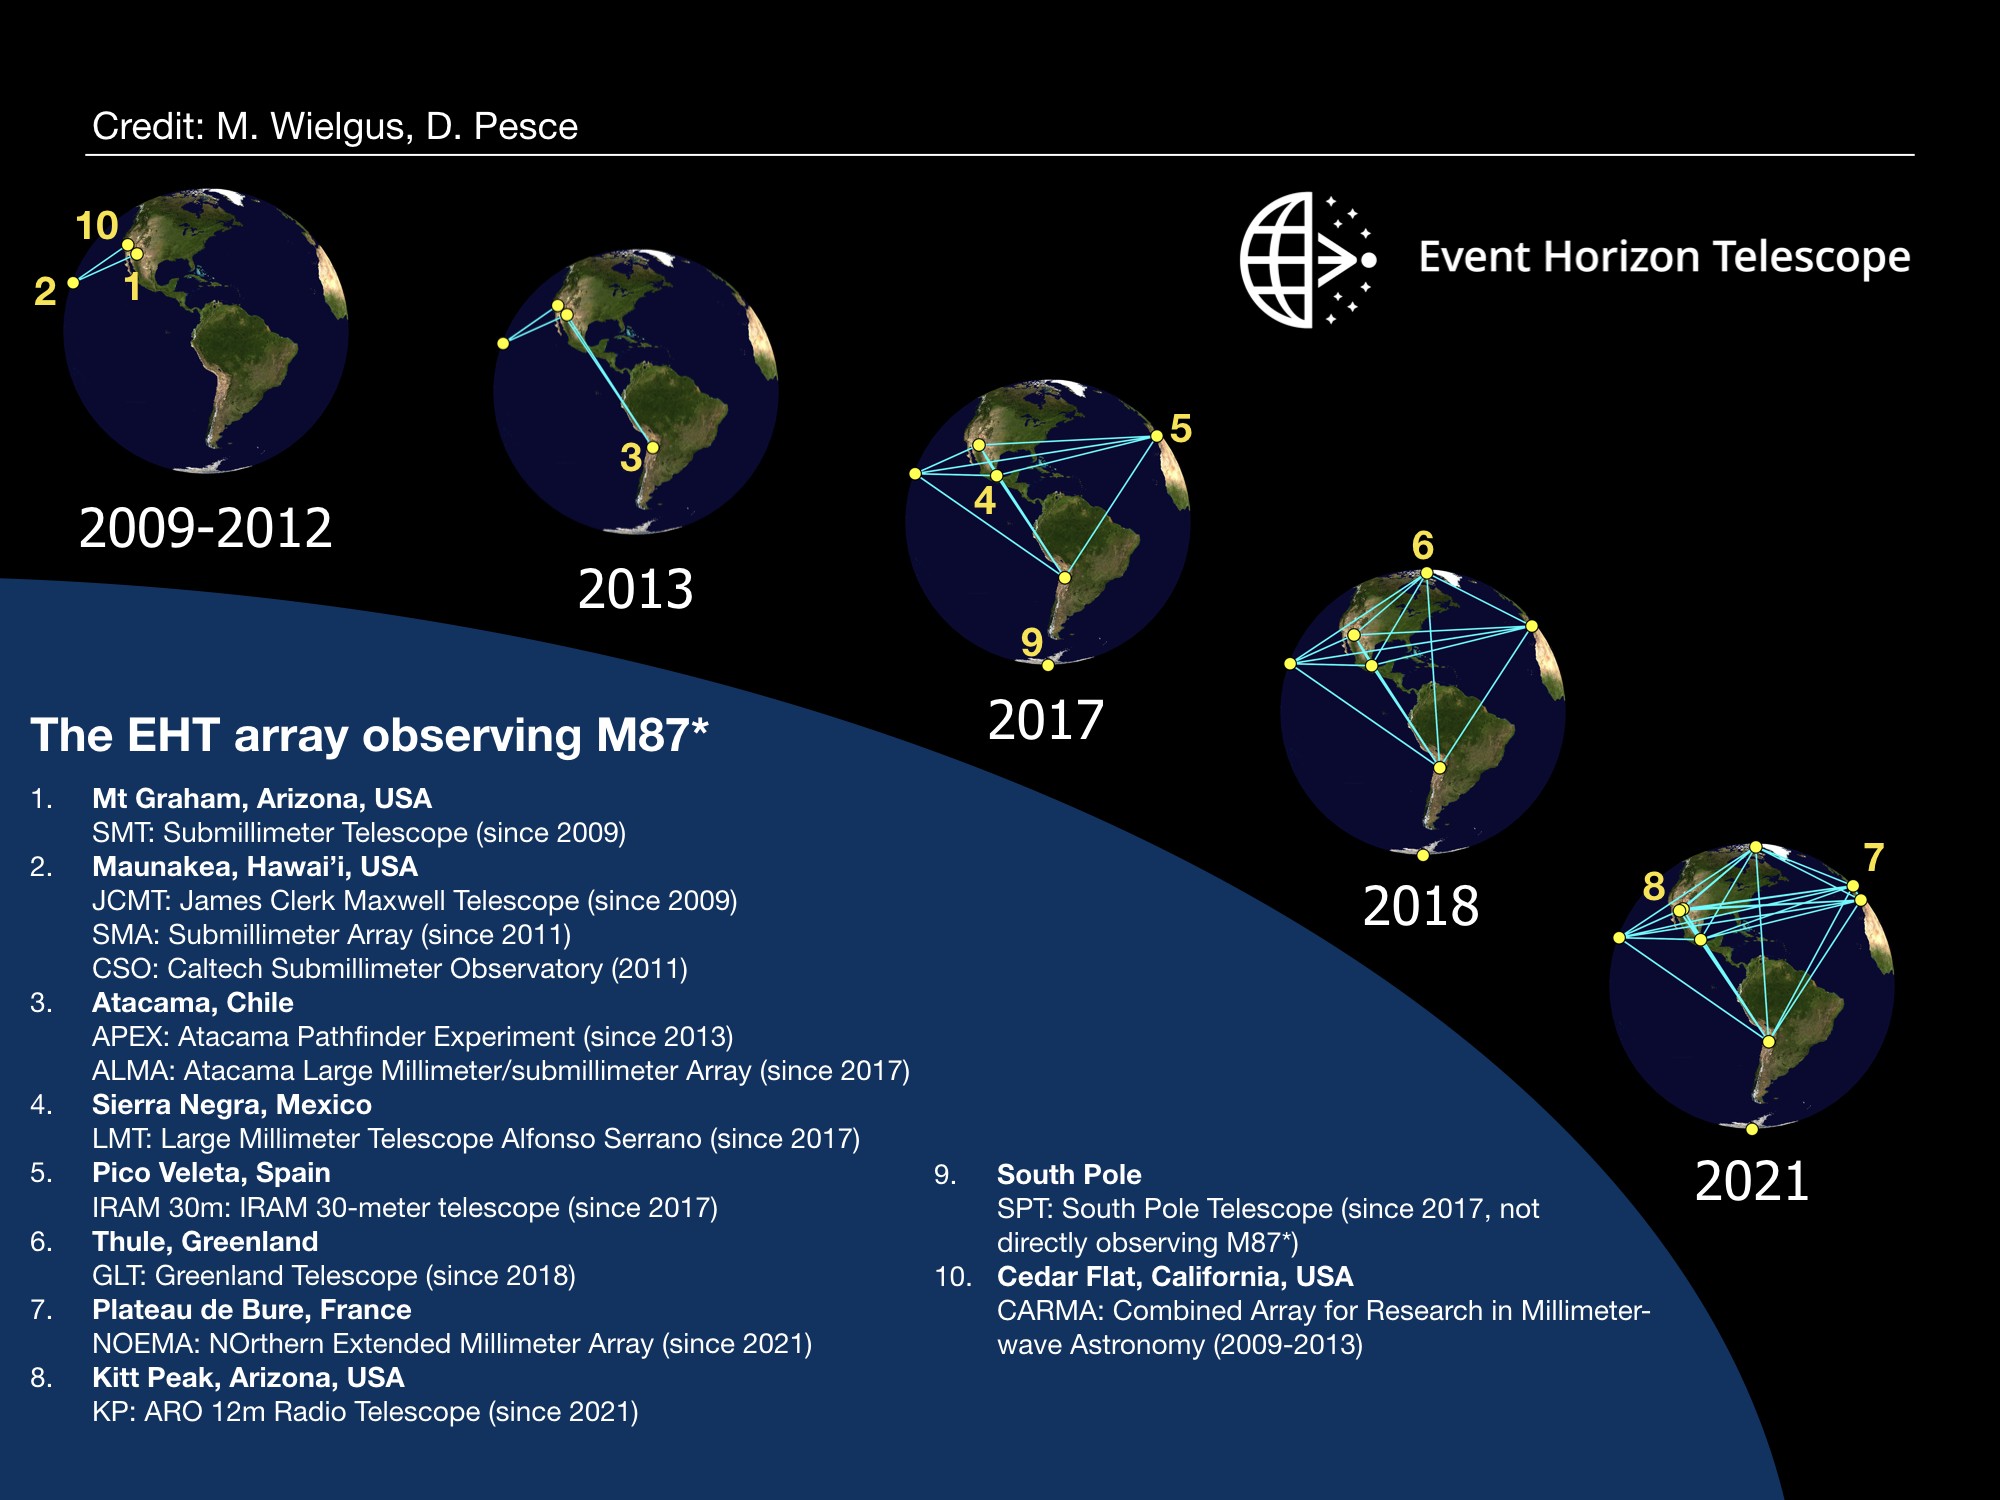 Teleskop Horyzontu Zdarzeń w latach 2009-2021